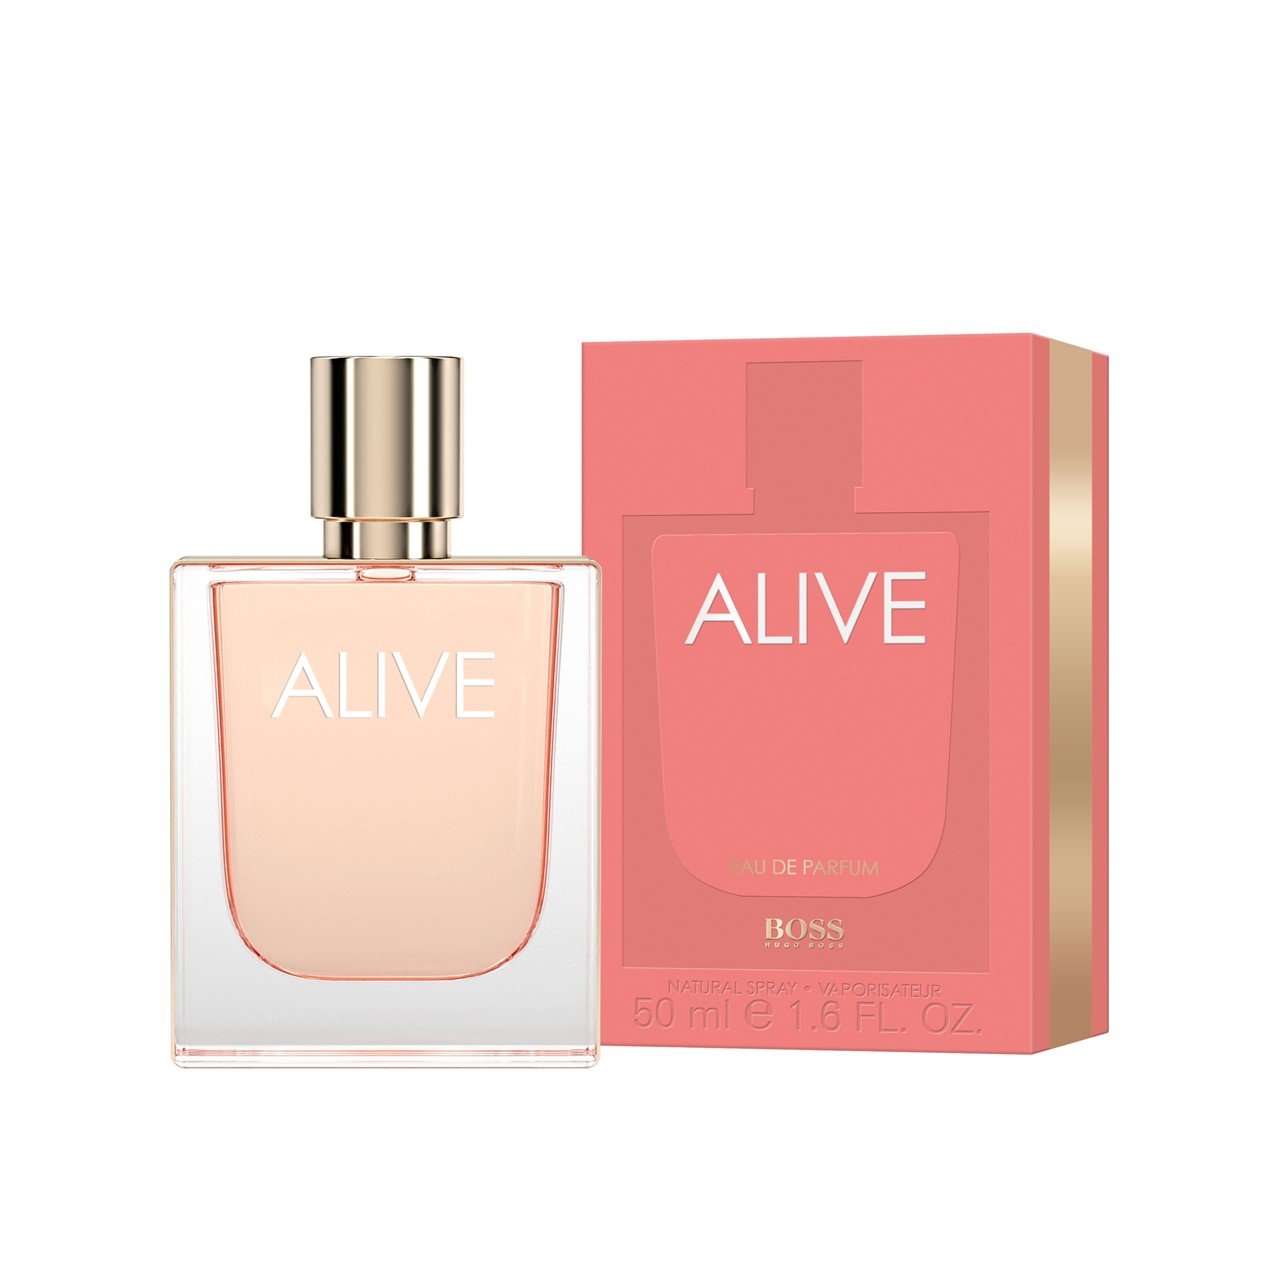 Hugo Boss Boss Alive Eau de Parfum For Women 50ml (1.7fl oz)